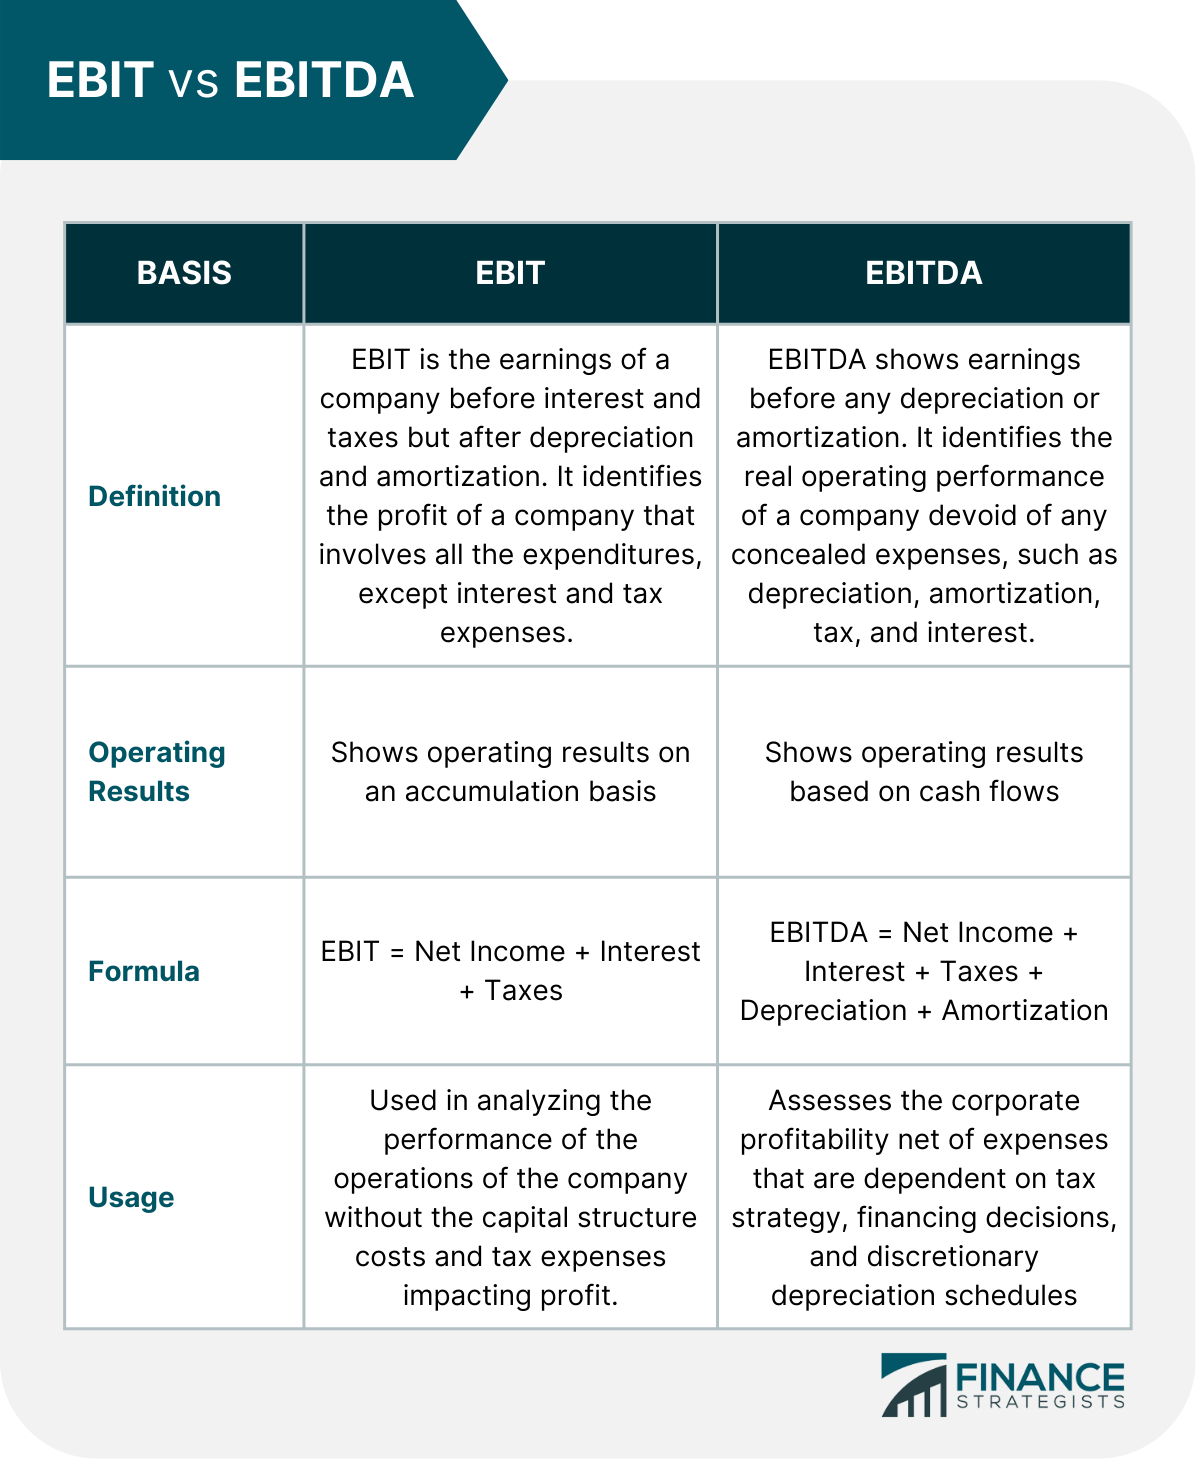 Ganancias antes de intereses e impuestos (EBIT)